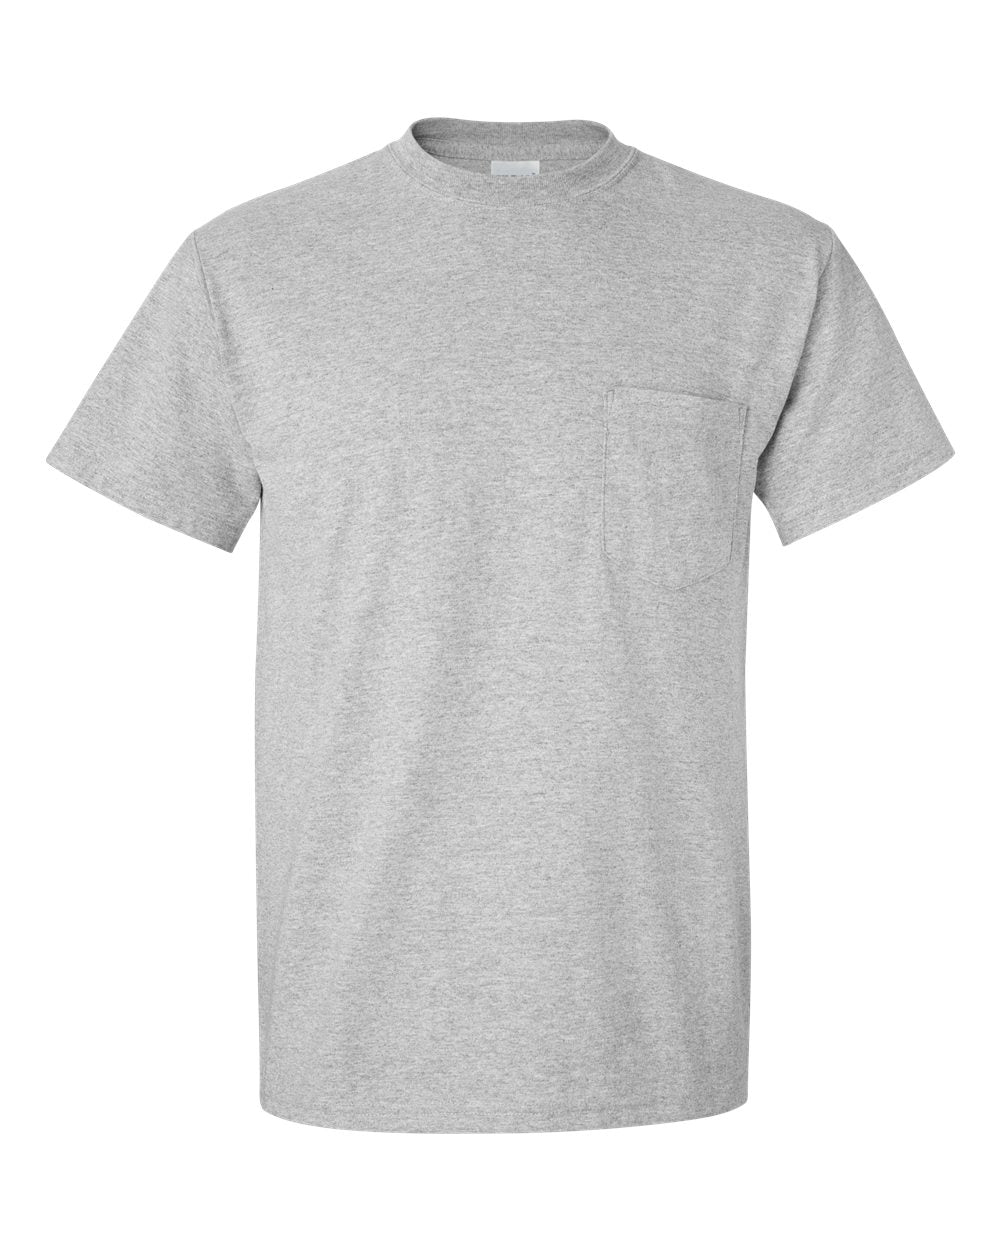 DryBlend® Pocket T-Shirt - Gildan 8300